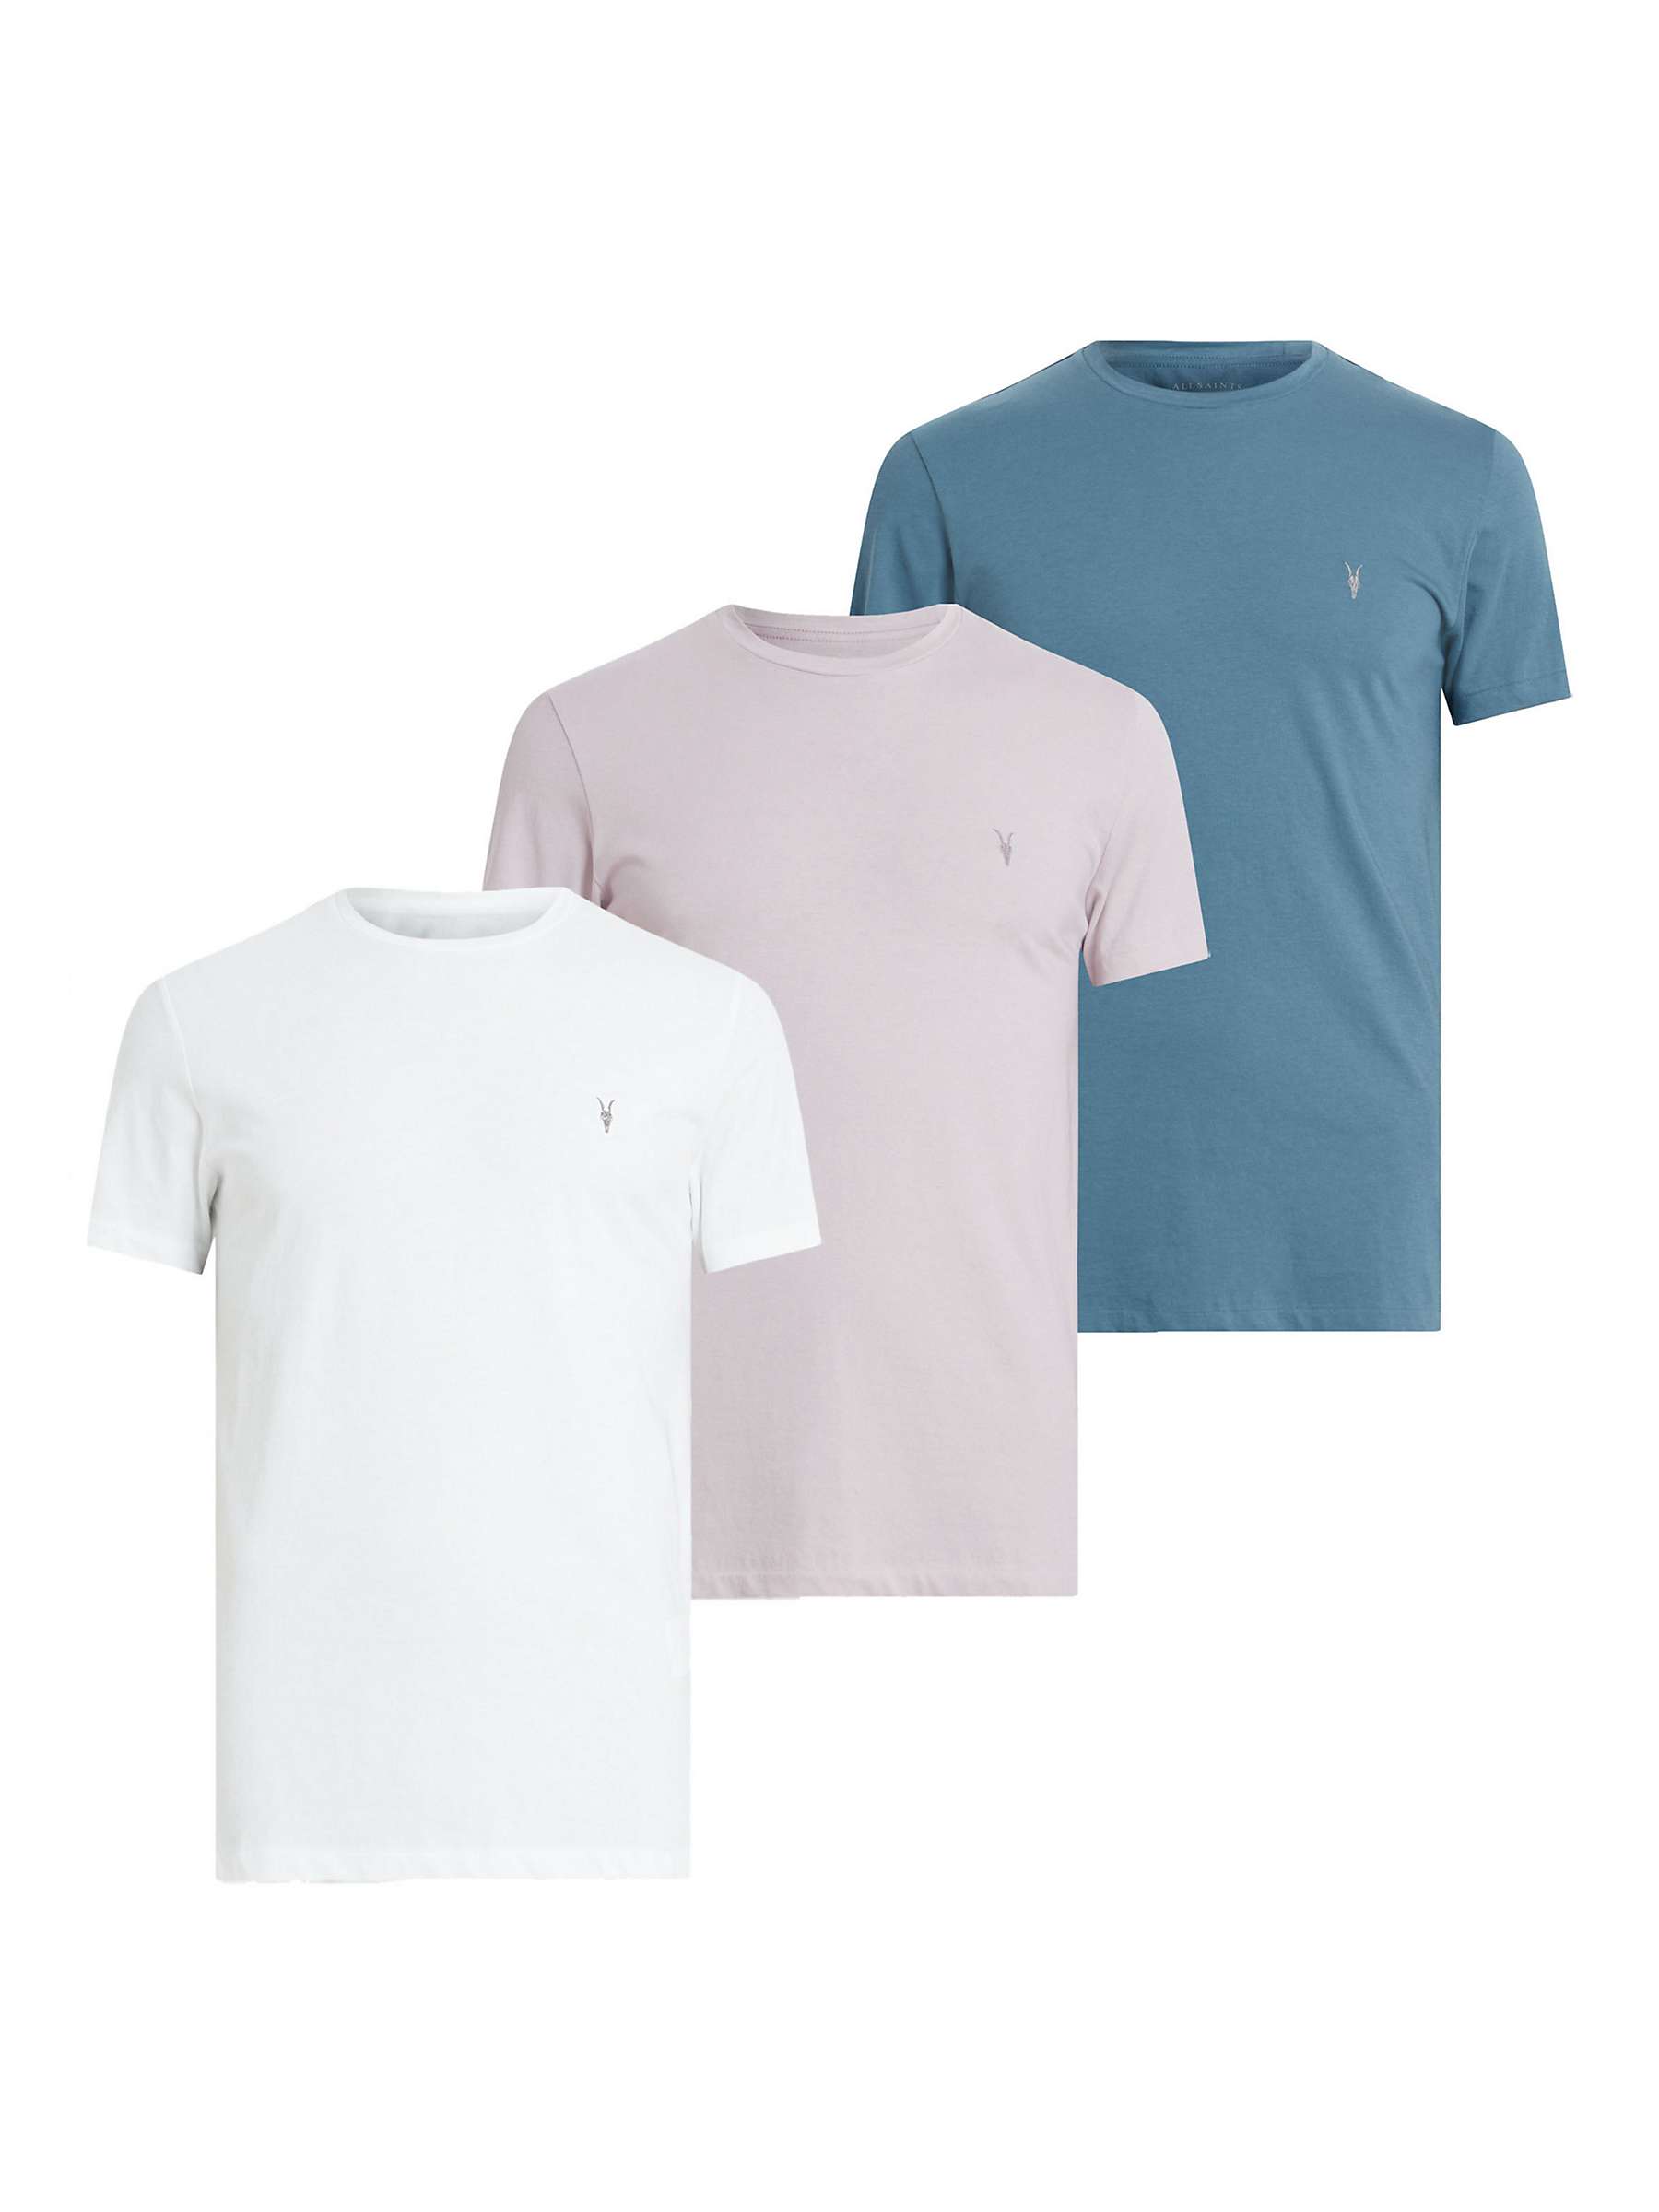 Buy AllSaints Tonic T-Shirt, Pack of 3, Multi Online at johnlewis.com